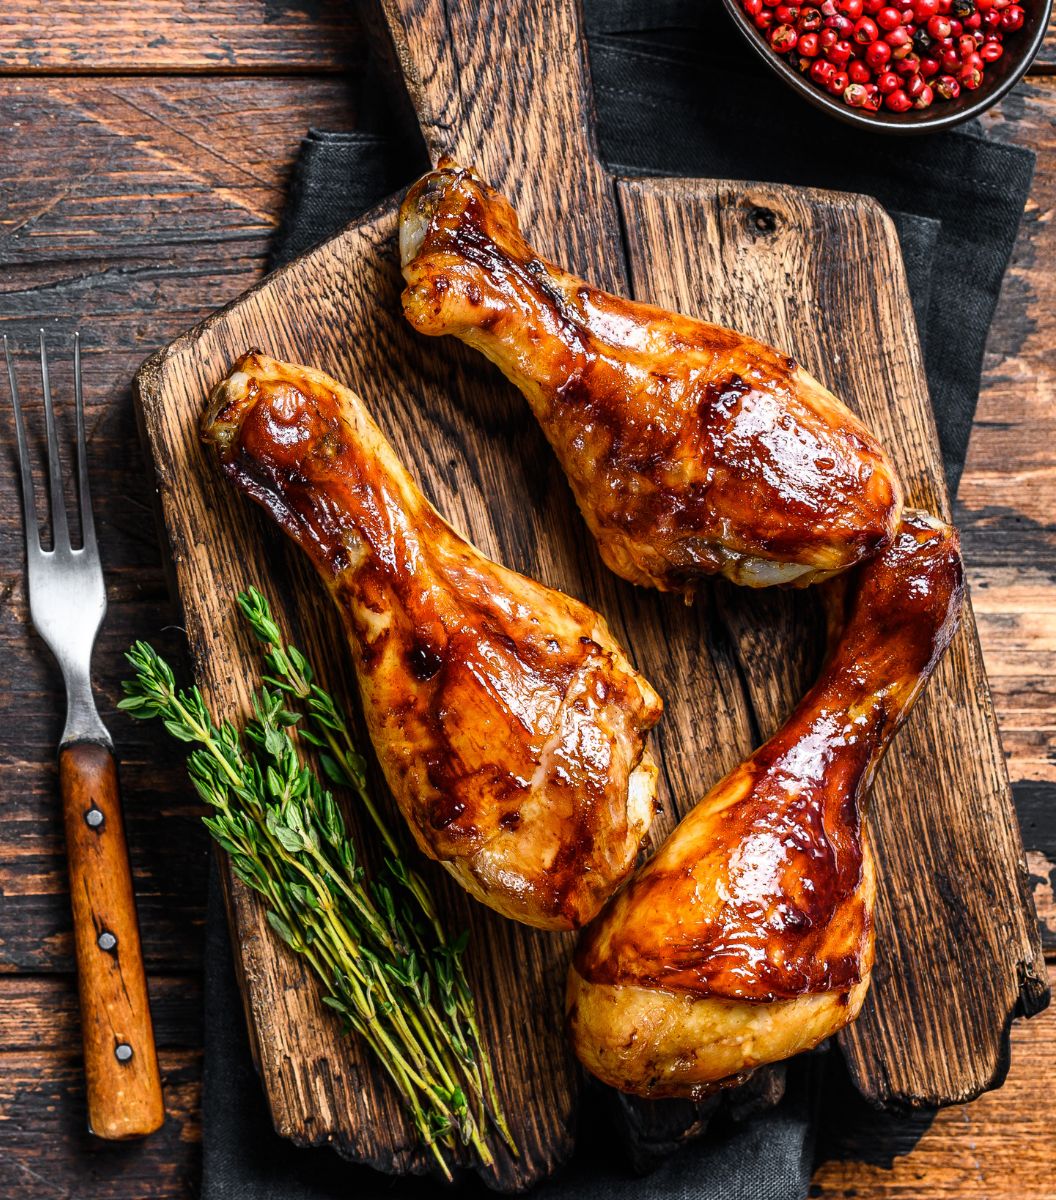 Free Range & Organic Chicken | Buy Singapore's Best Quality Chicken ...